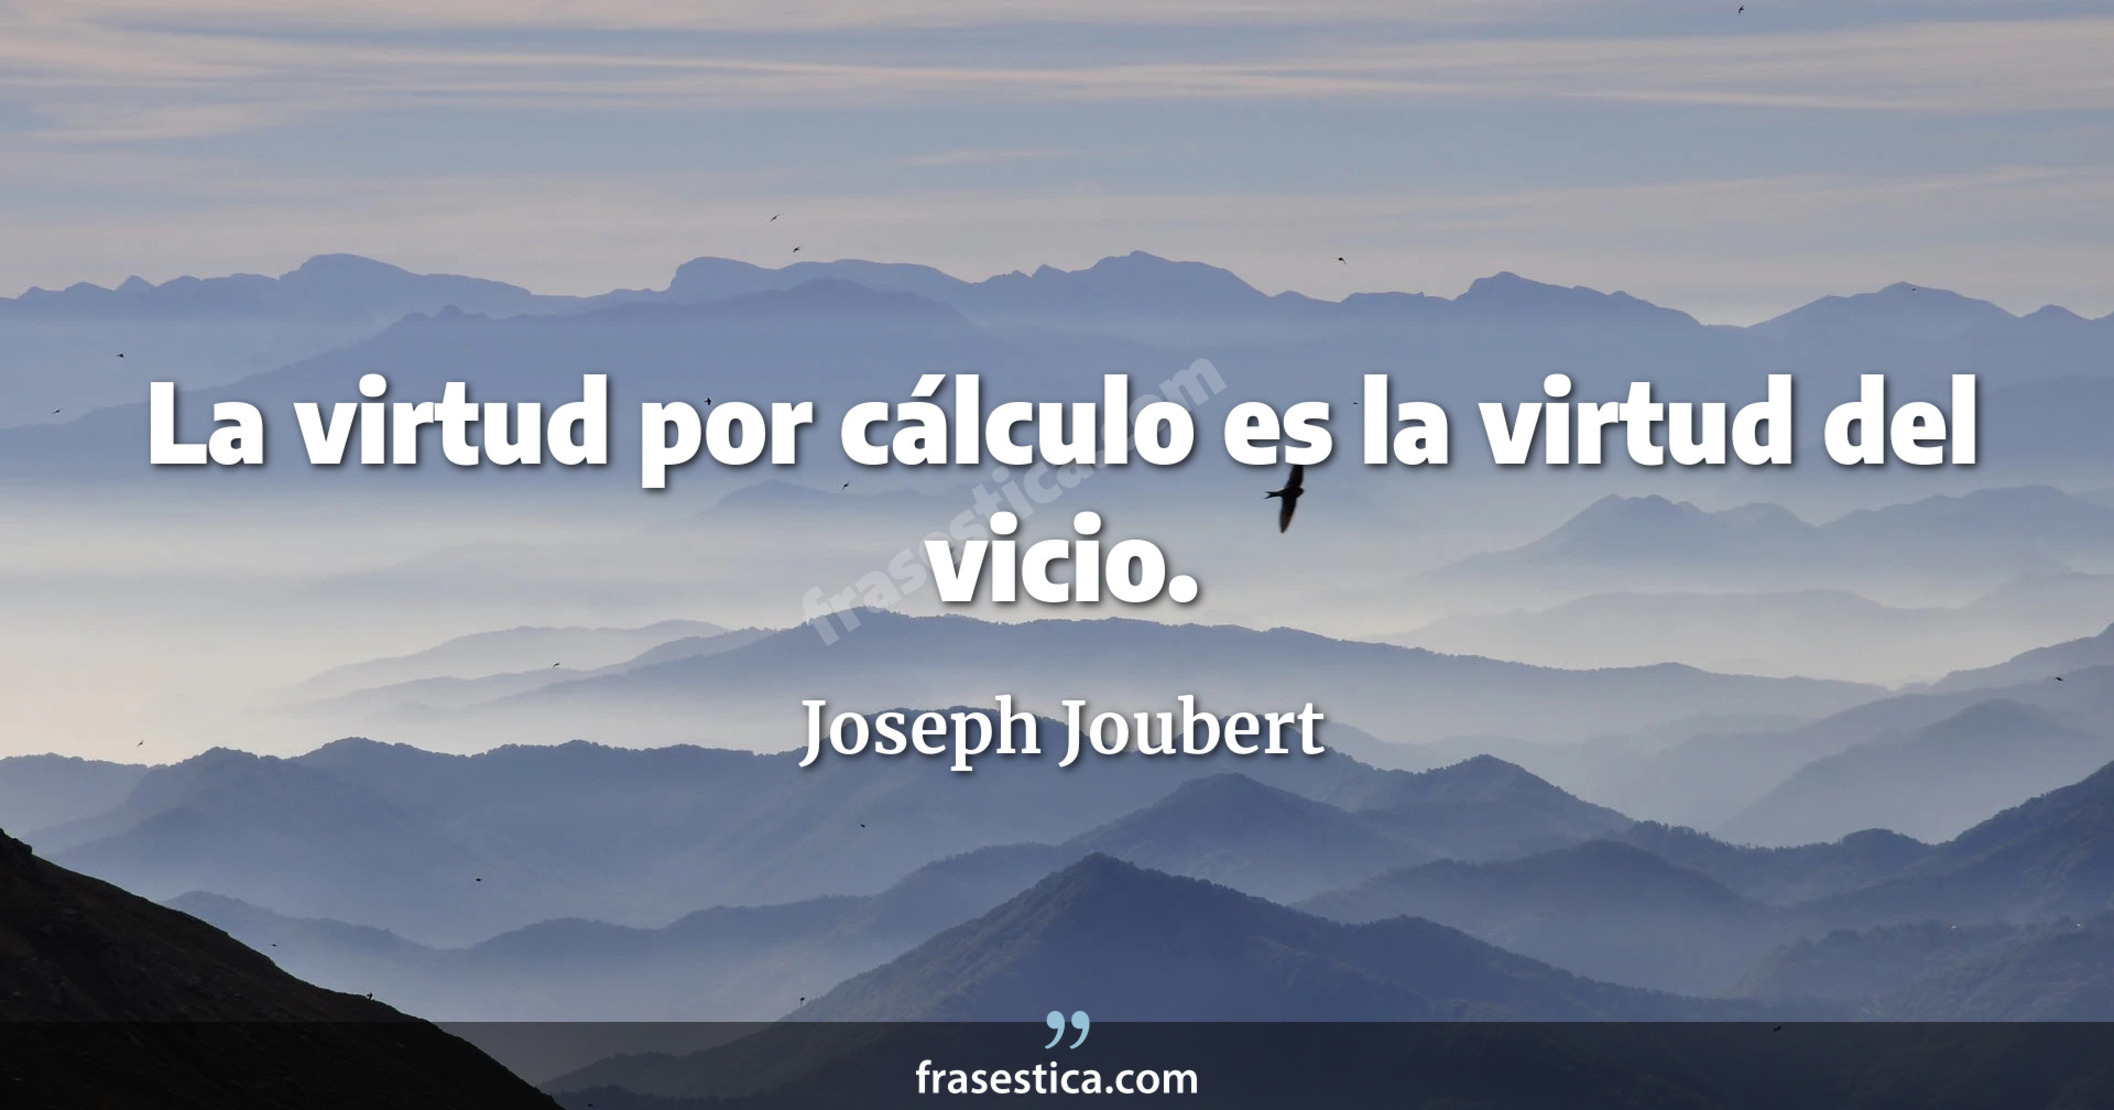 La virtud por cálculo es la virtud del vicio. - Joseph Joubert